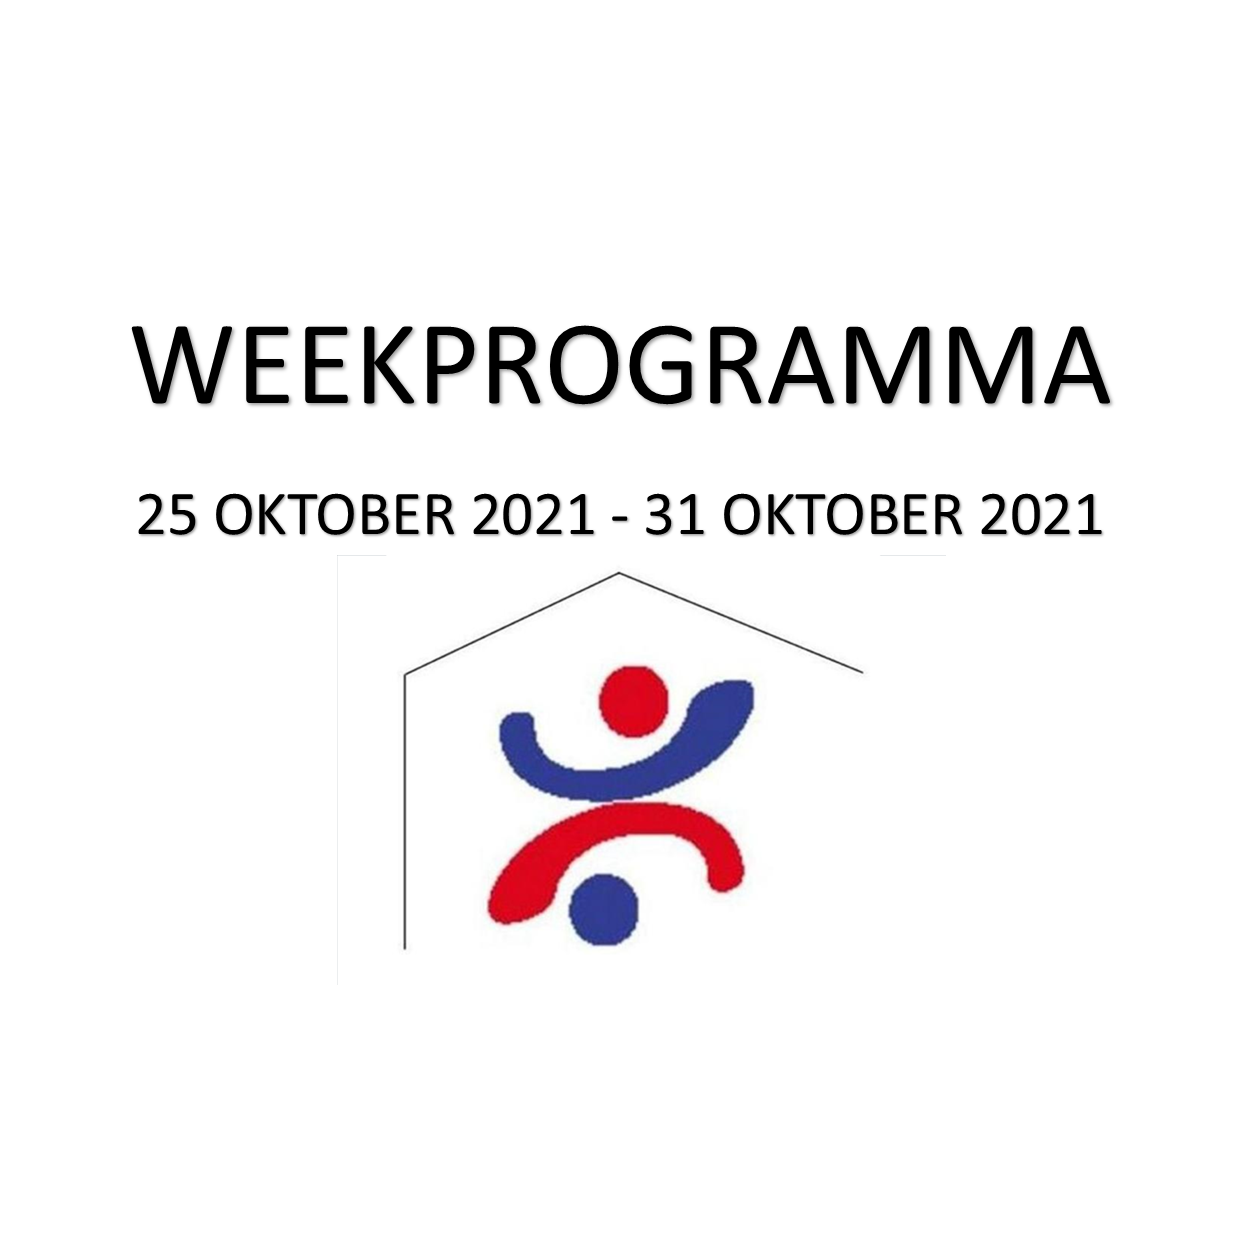 Weekprogramma (25 okt-31 okt)